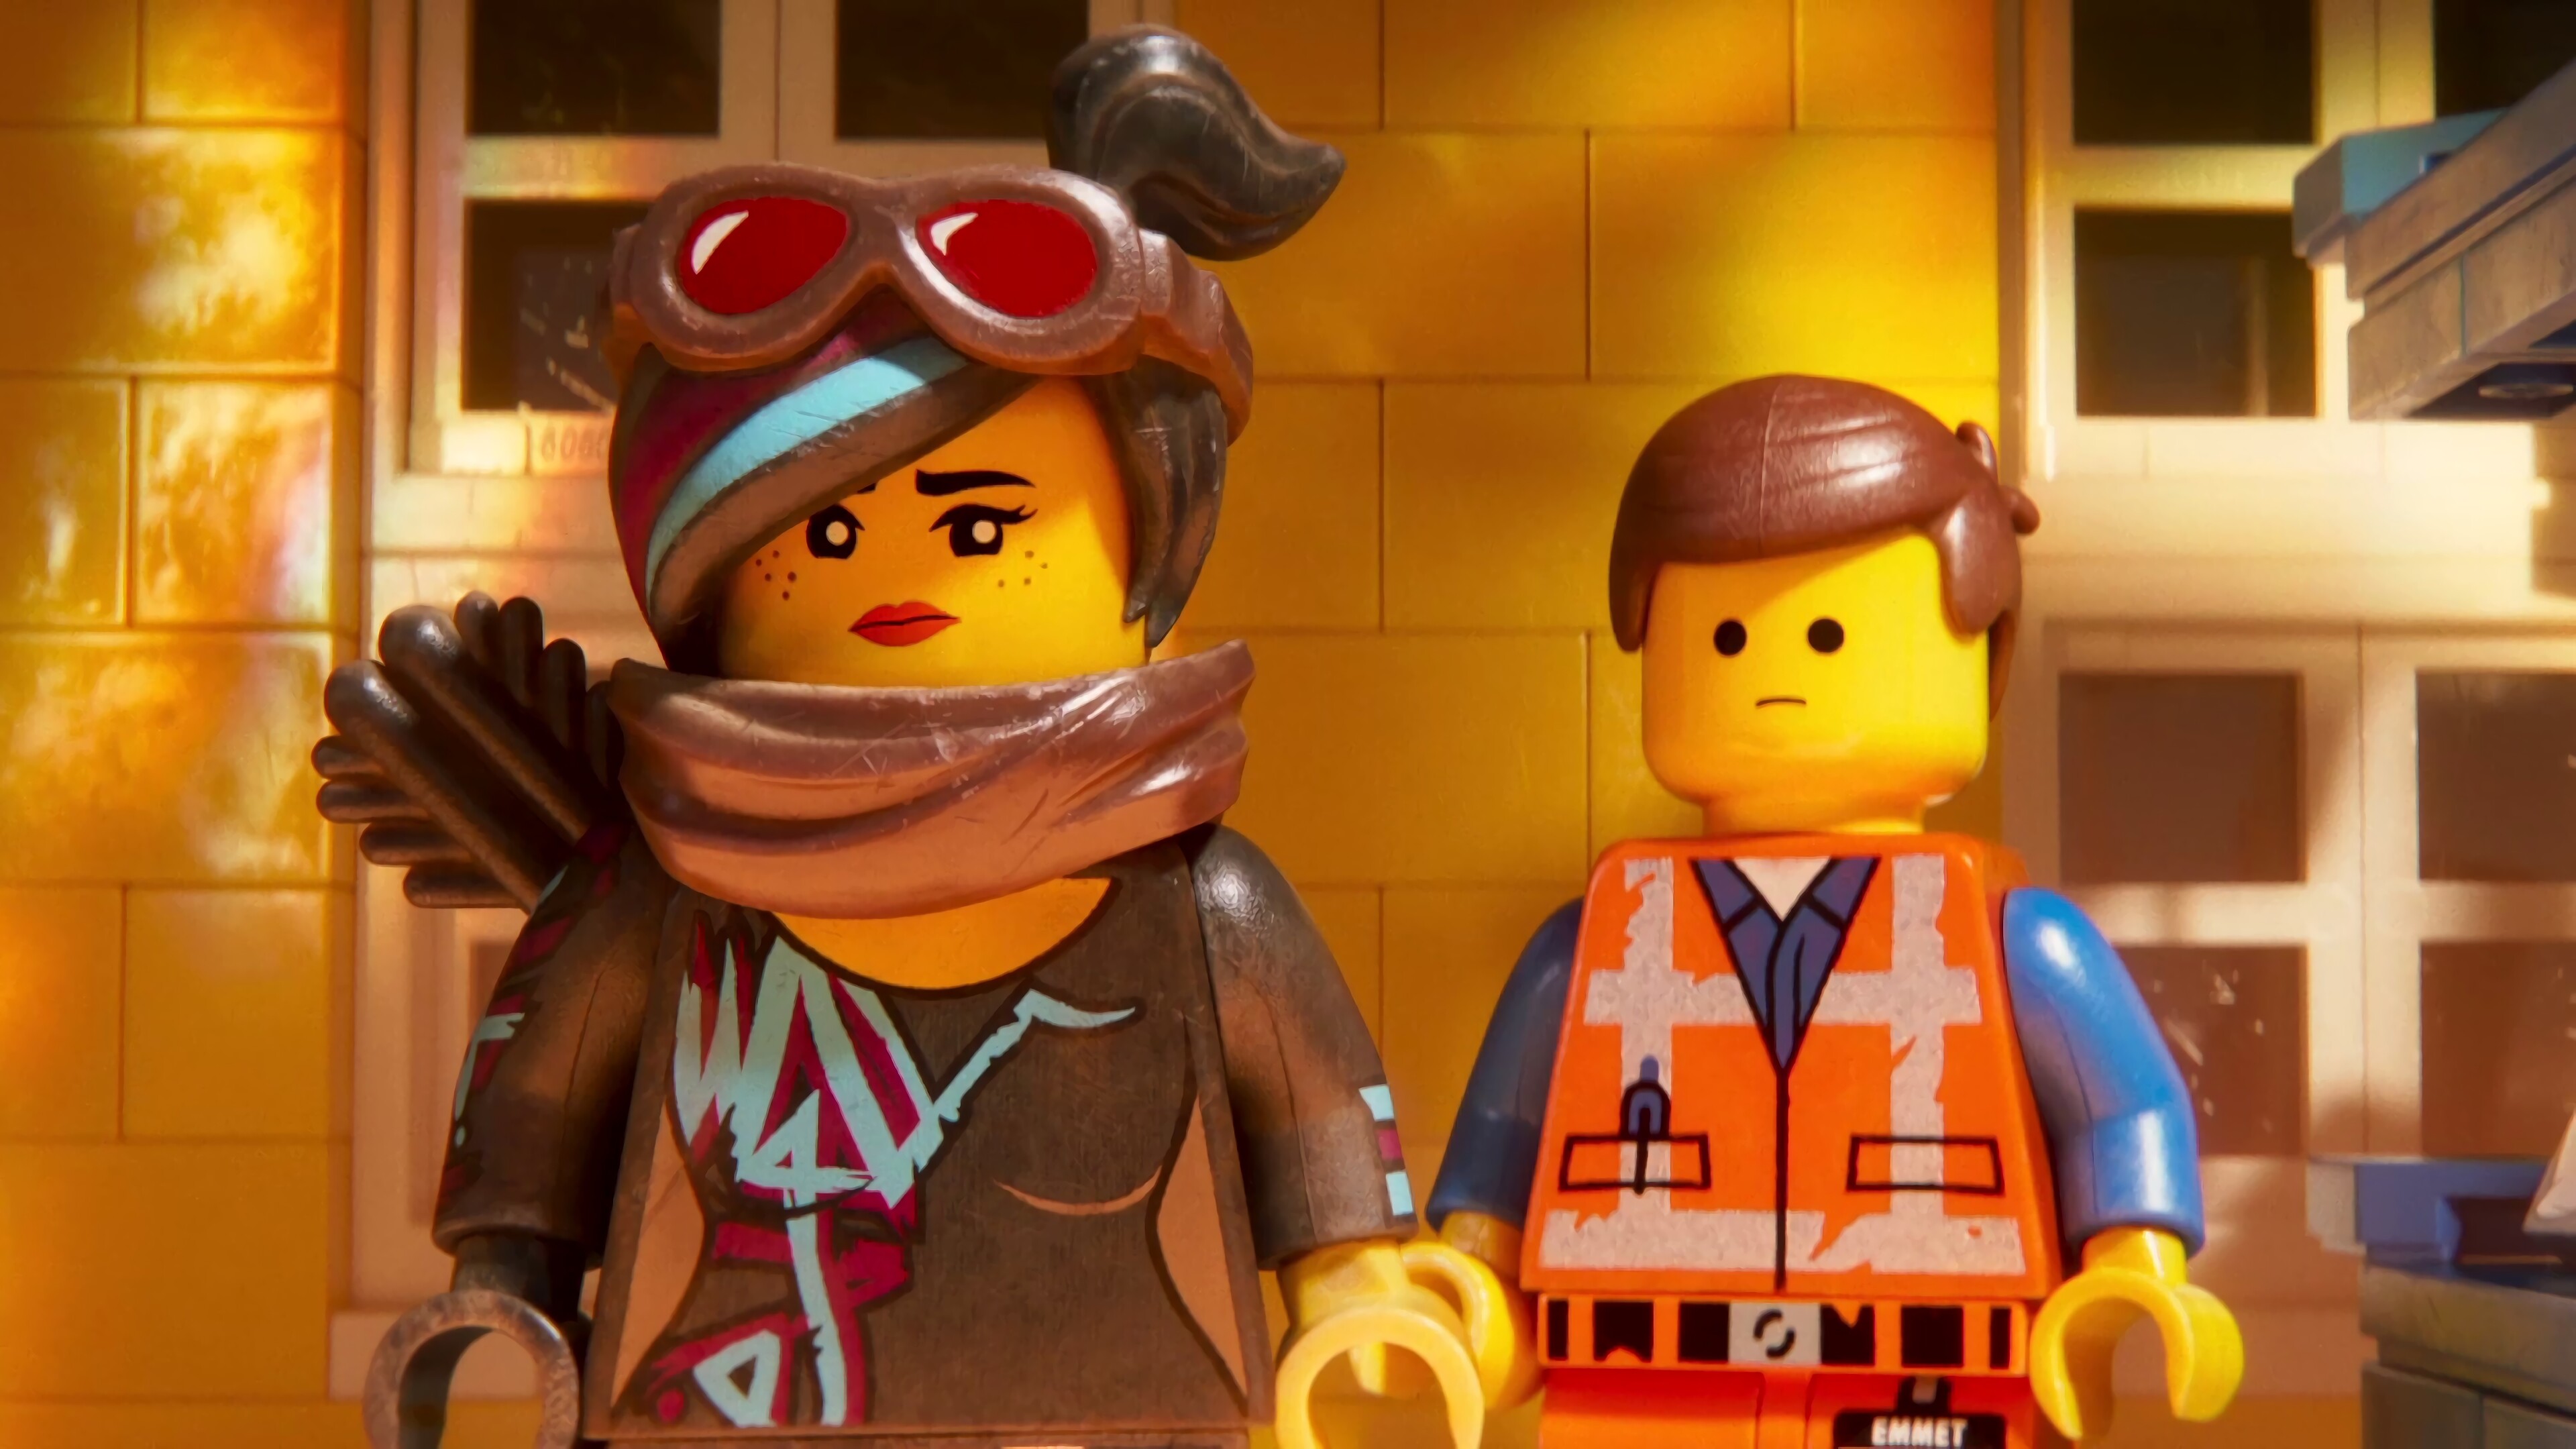 The Lego Movie: Emmet Brickowski, Construction worker, Toys. 3840x2160 4K Wallpaper.